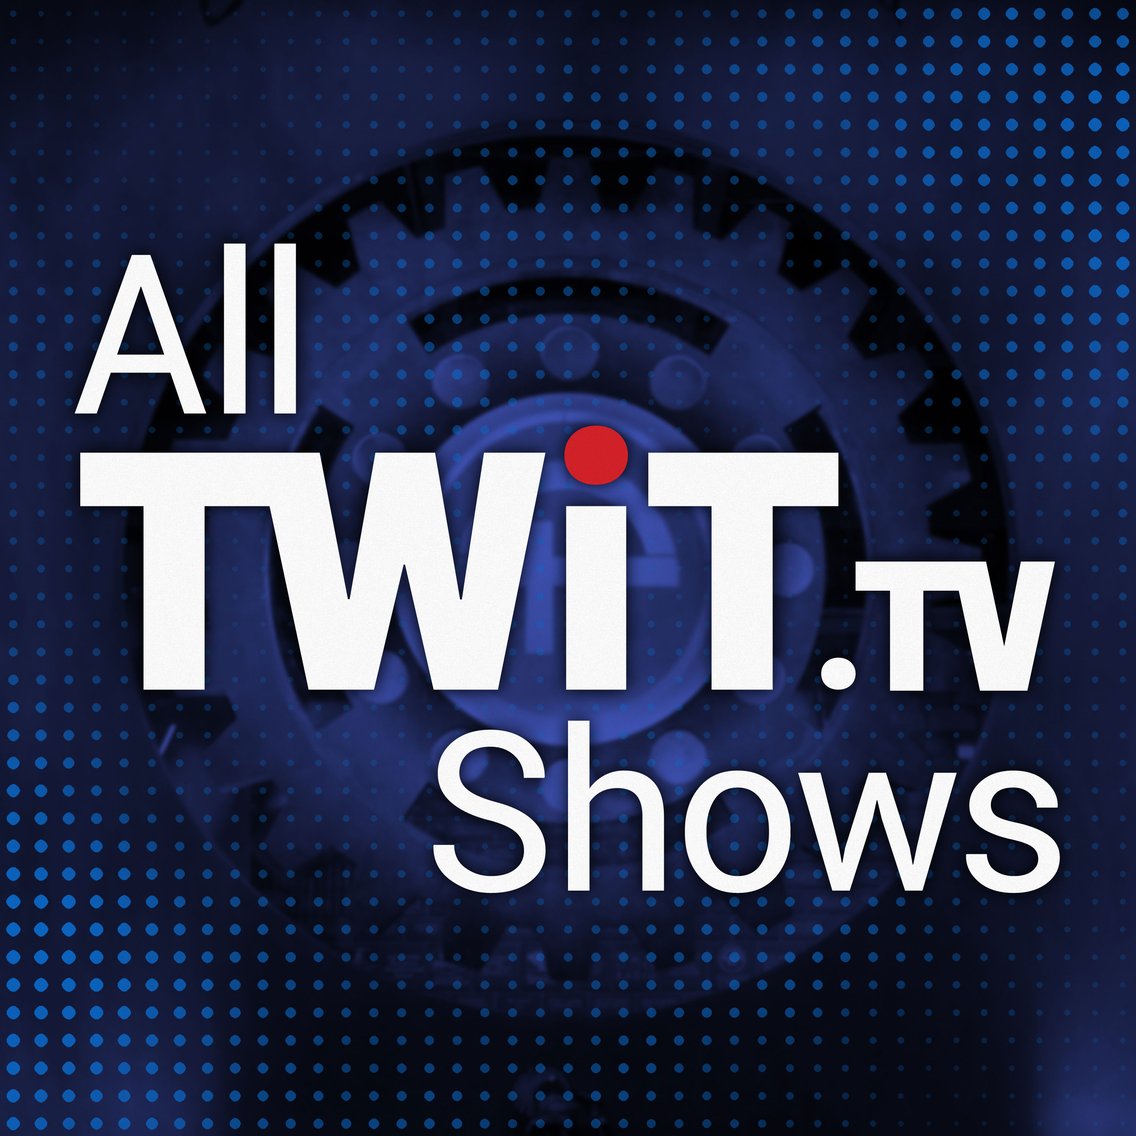 All TWiT.tv Shows - immagine di copertina
